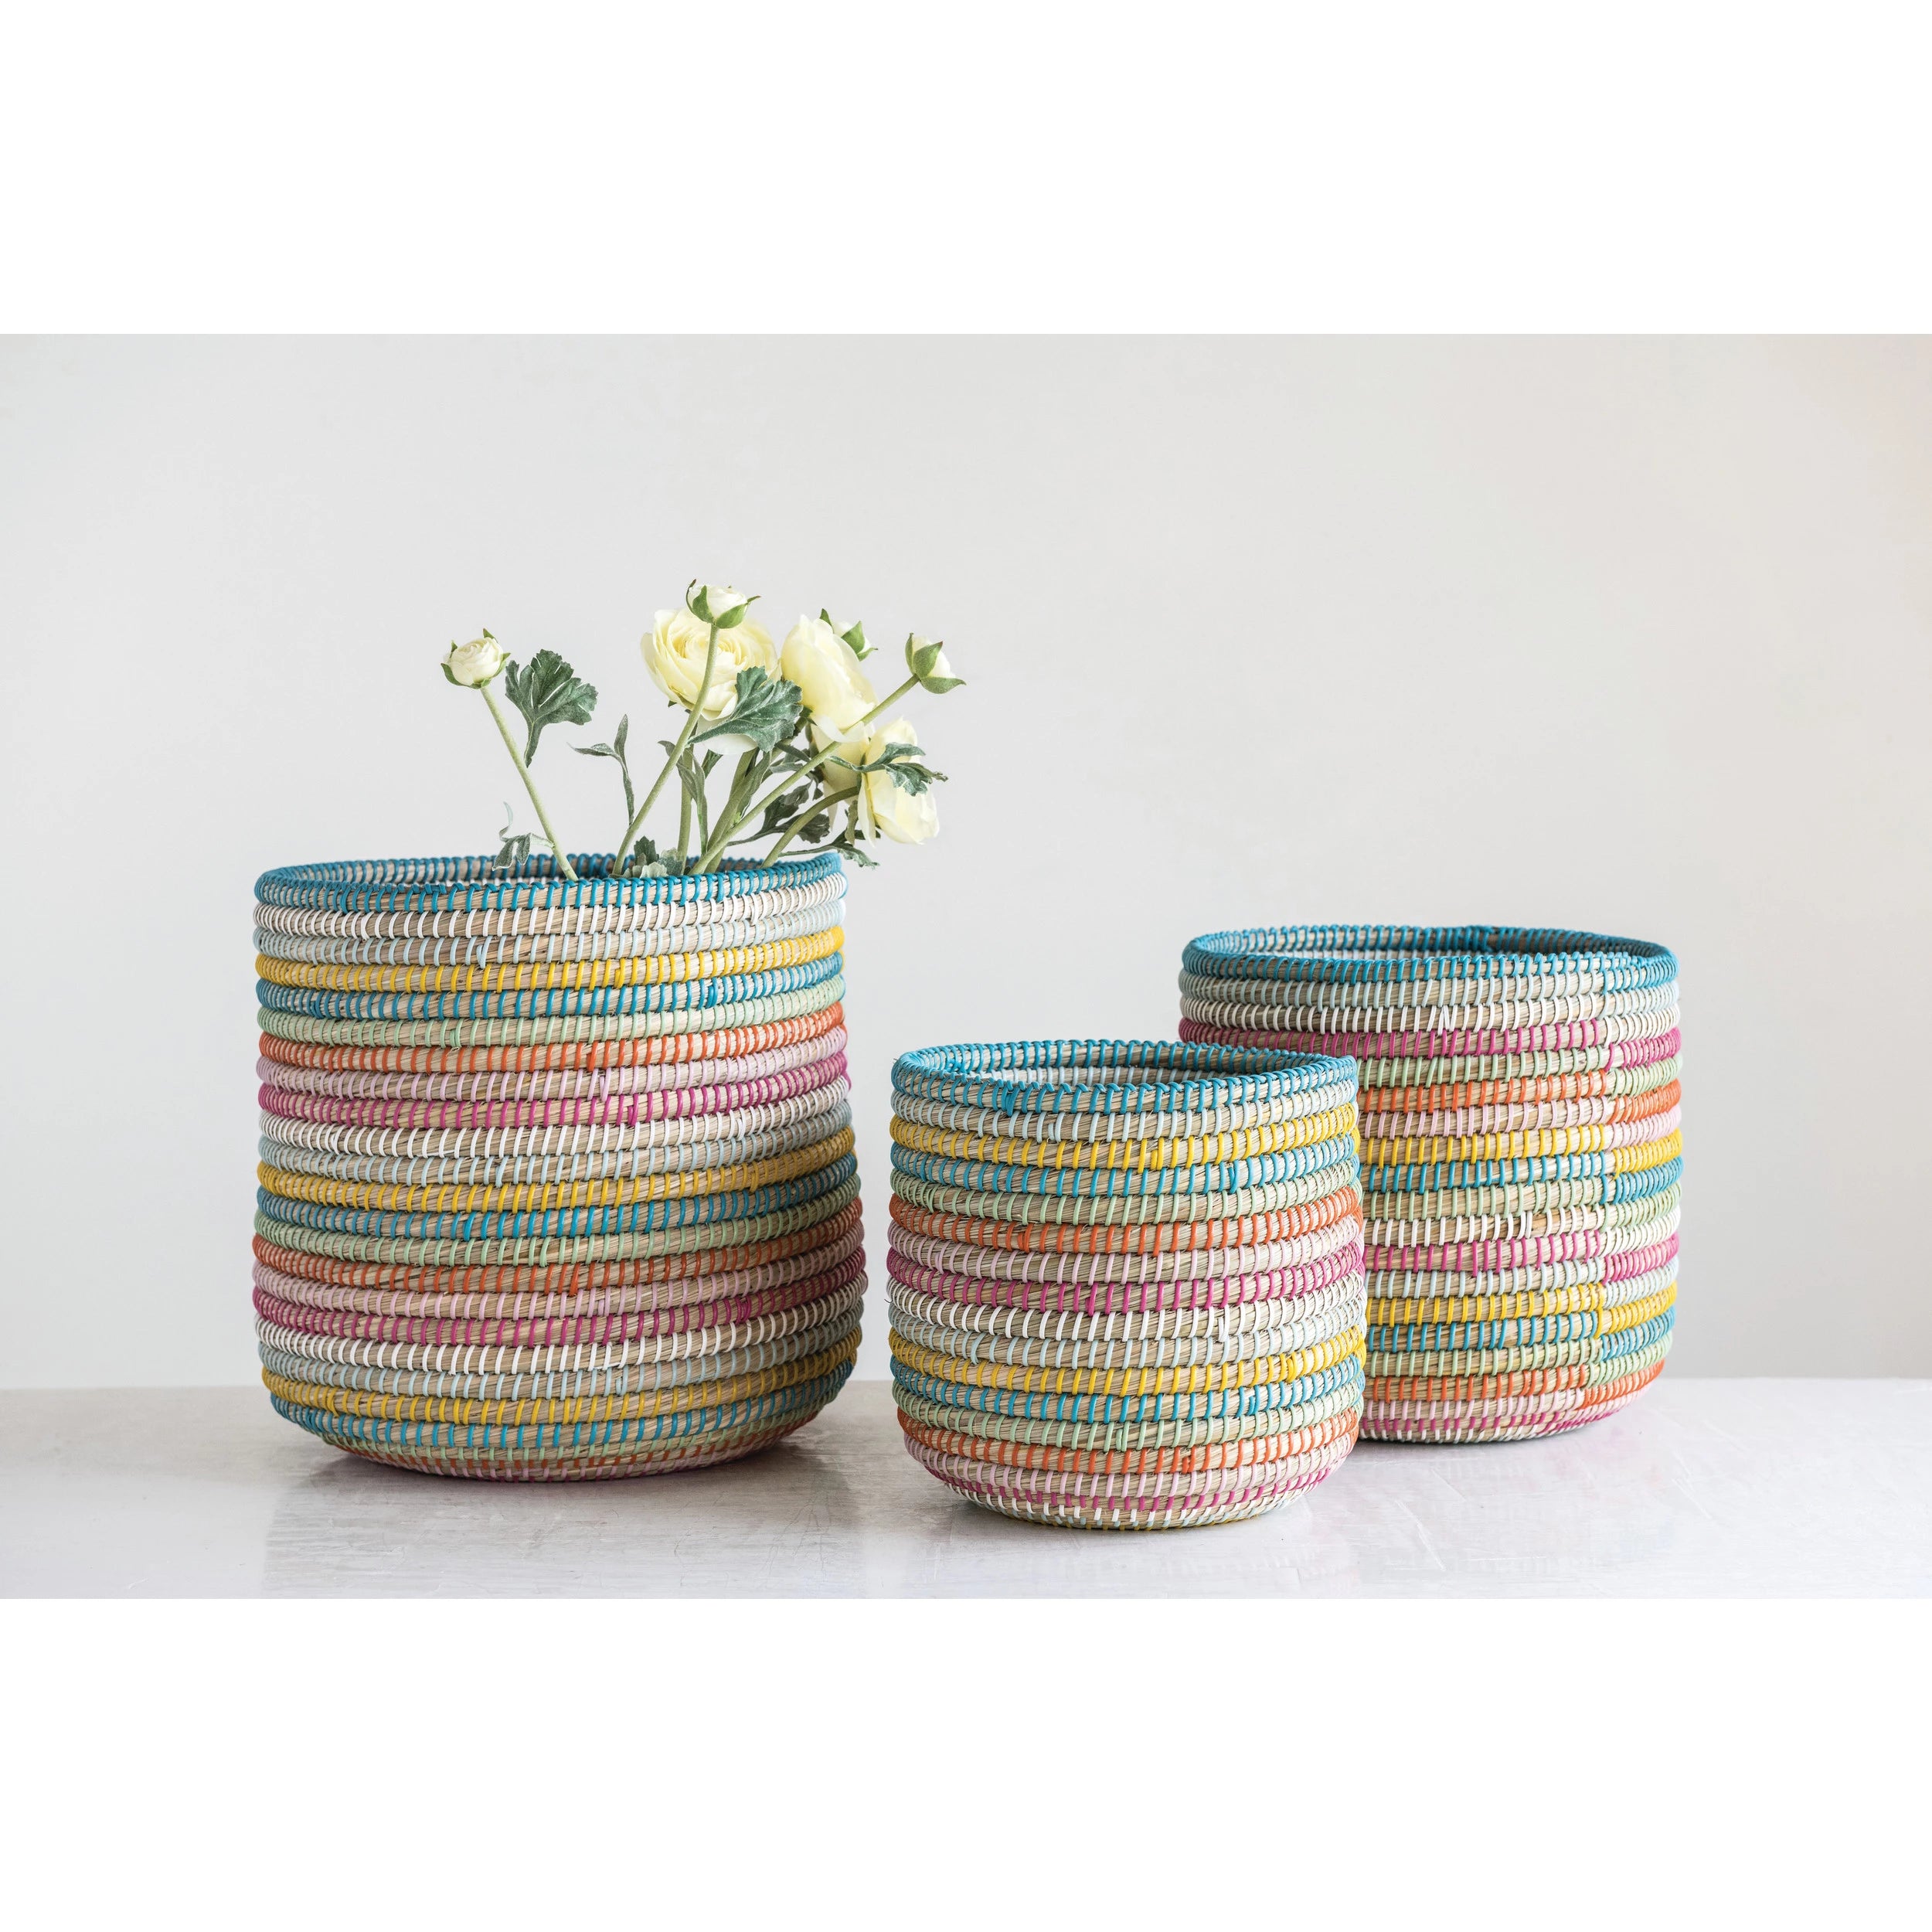 Multi Color Hand-Woven Grass Baskets